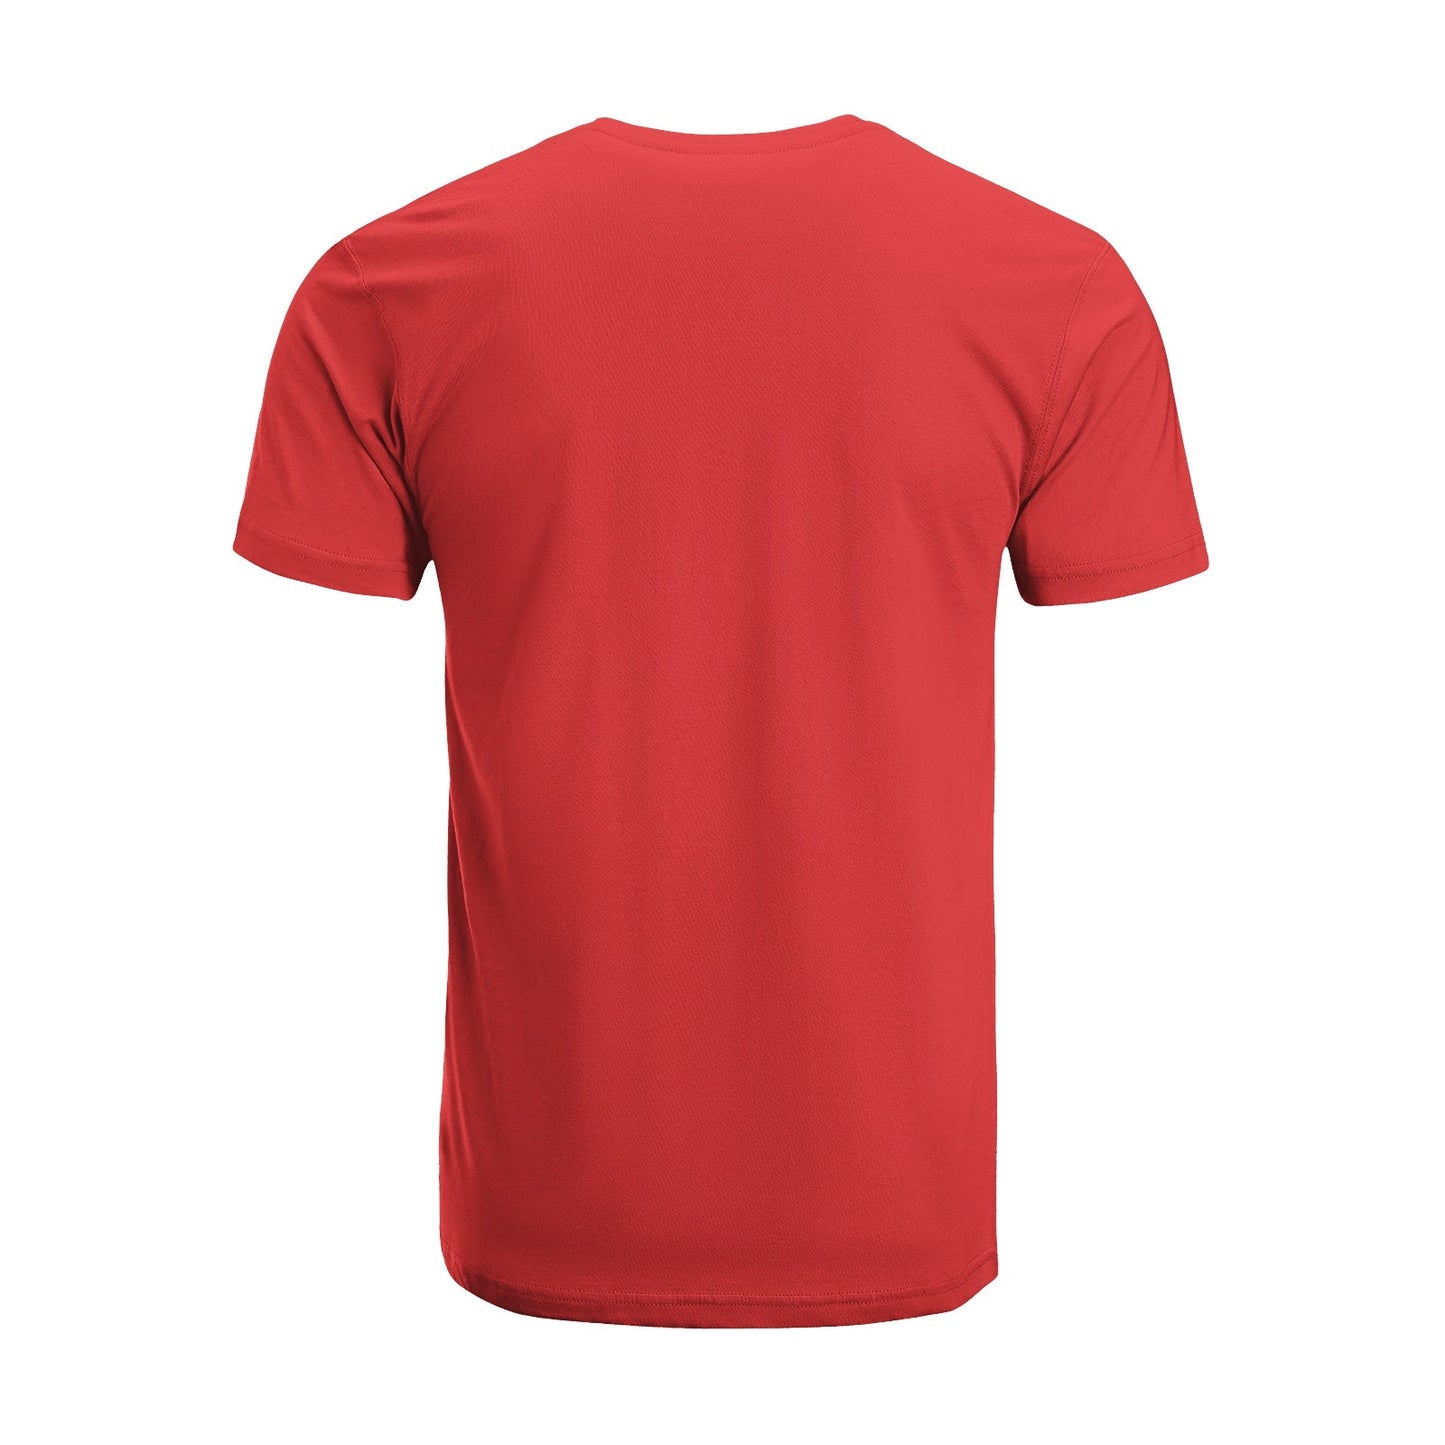 Unisex Short Sleeve Crew Neck Cotton Jersey T-Shirt VEGAN 17